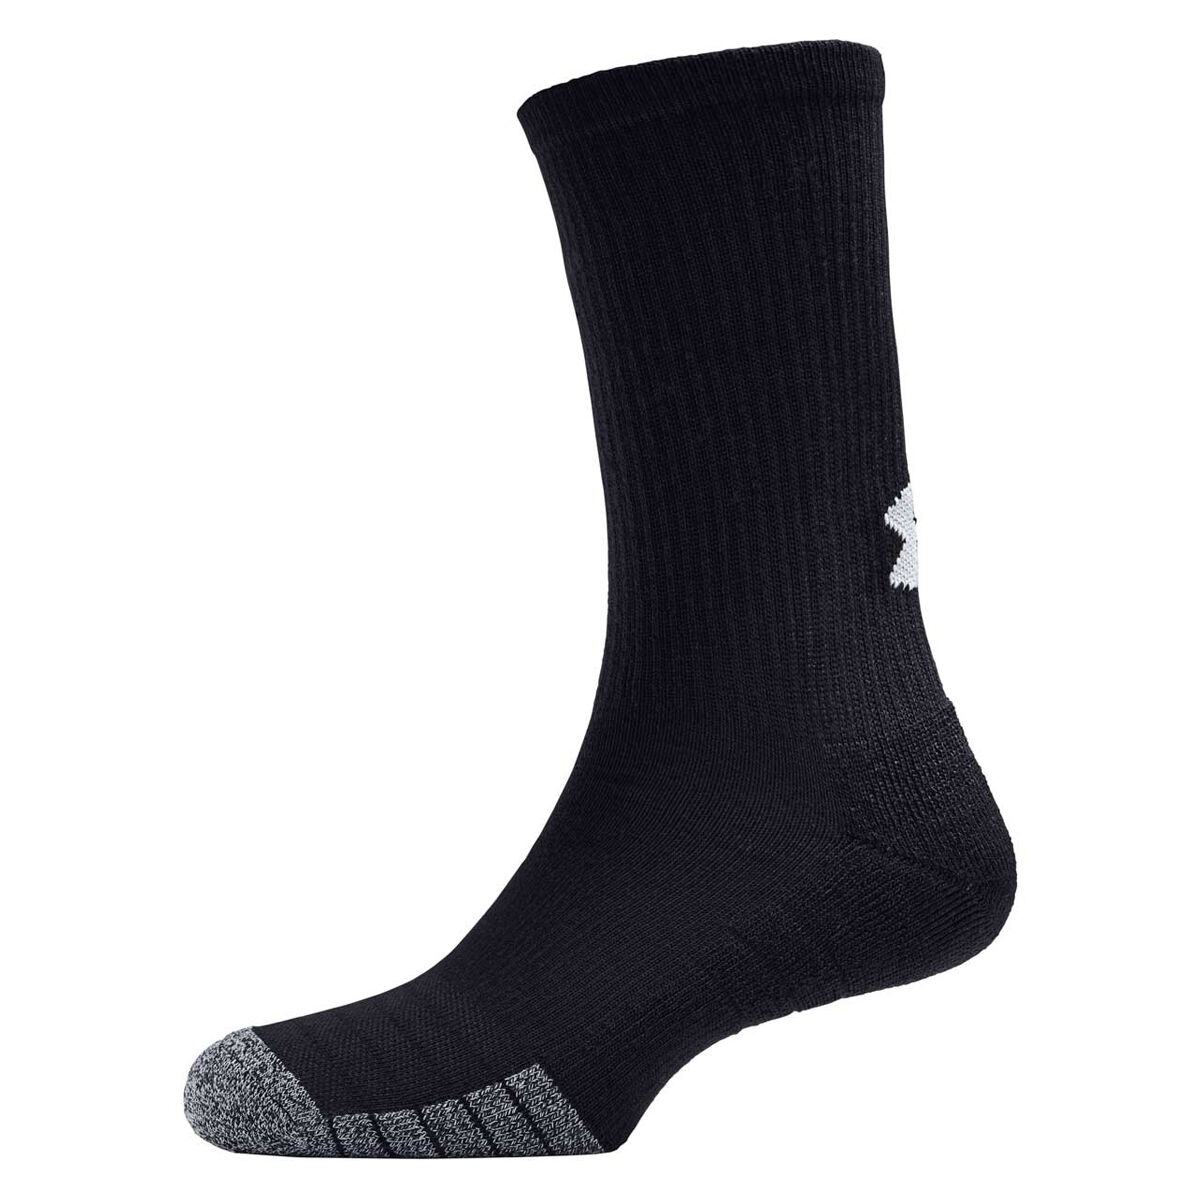 I Love BaseBall Socks Black Cotton Socks. 